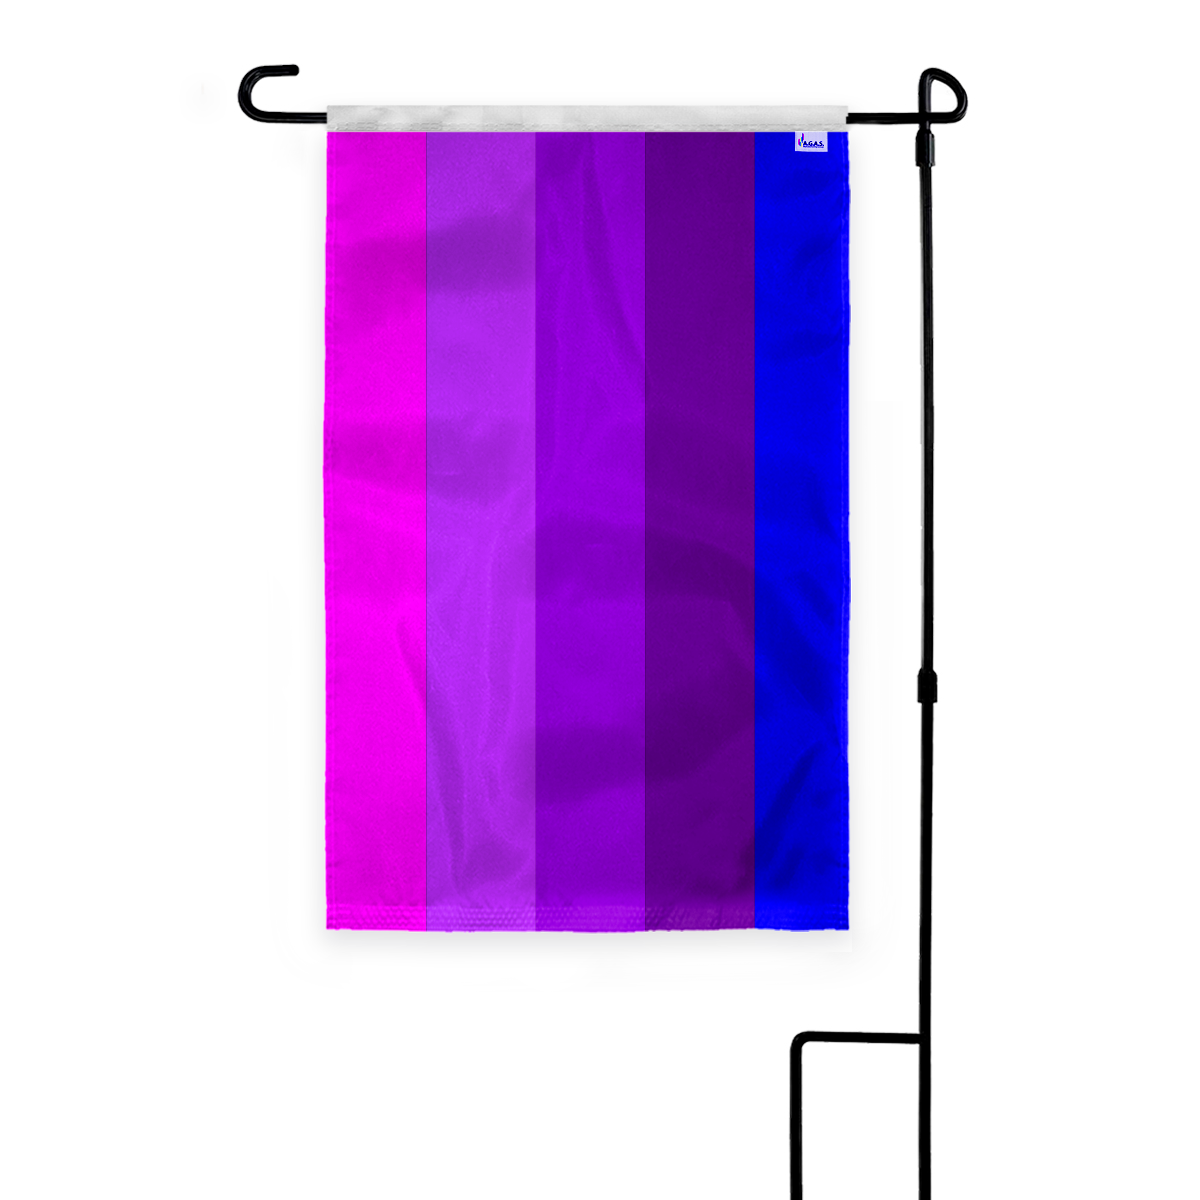 AGAS Transexual Alt Garden Flag 12x18 inch - Printed on Outdoor 200D Nylon